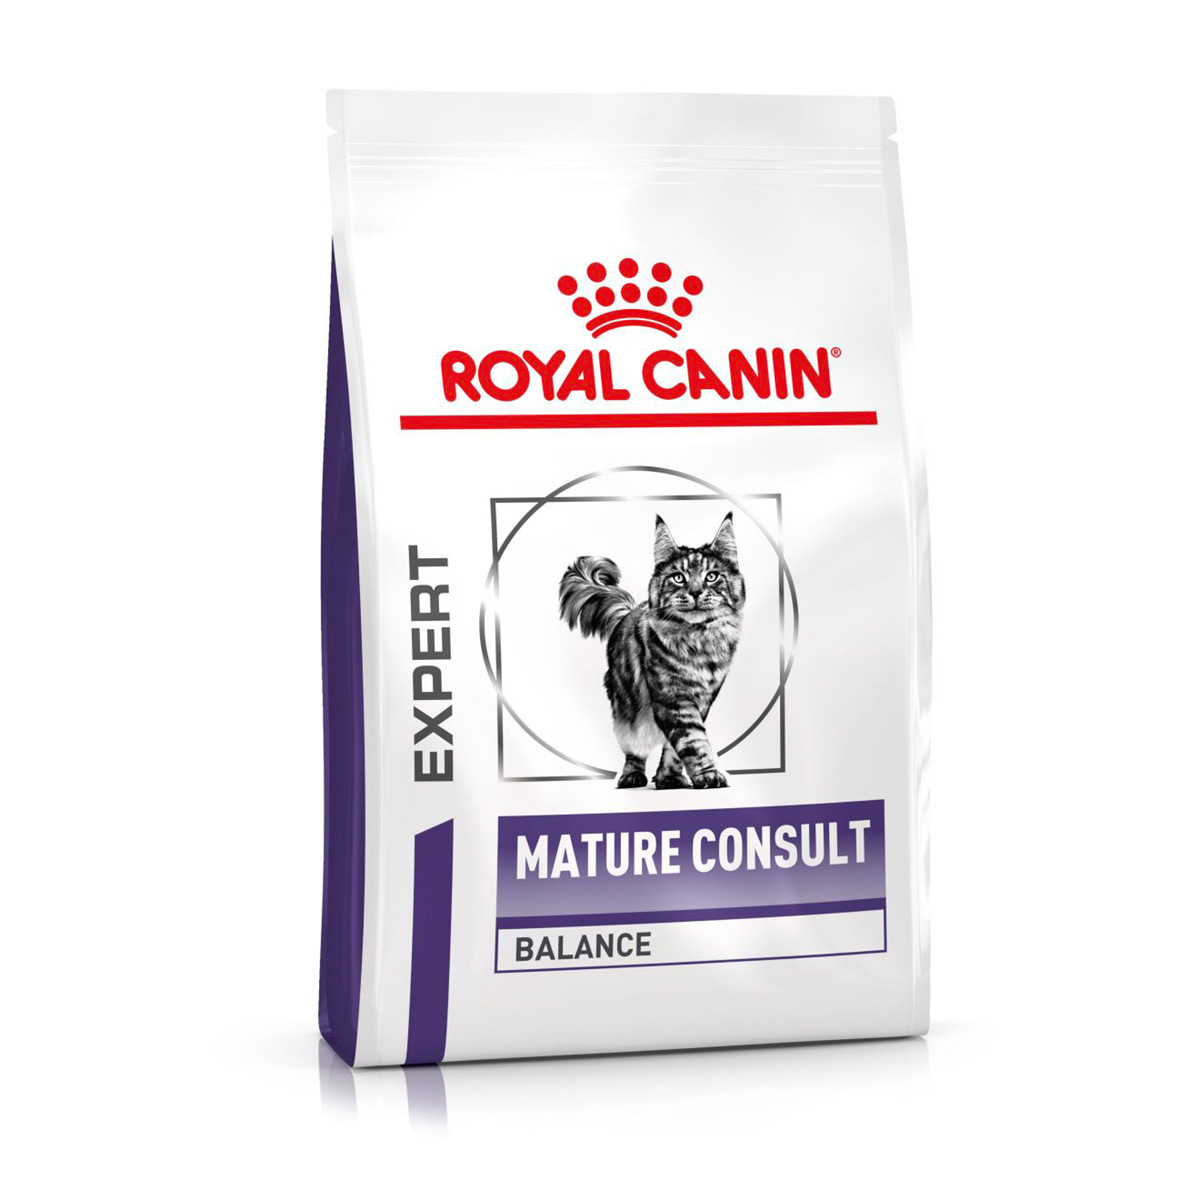 ROYAL CANIN® Expert MATURE CONSULT BALANCE Trockenfutter für Katzen 10kg von Royal Canin